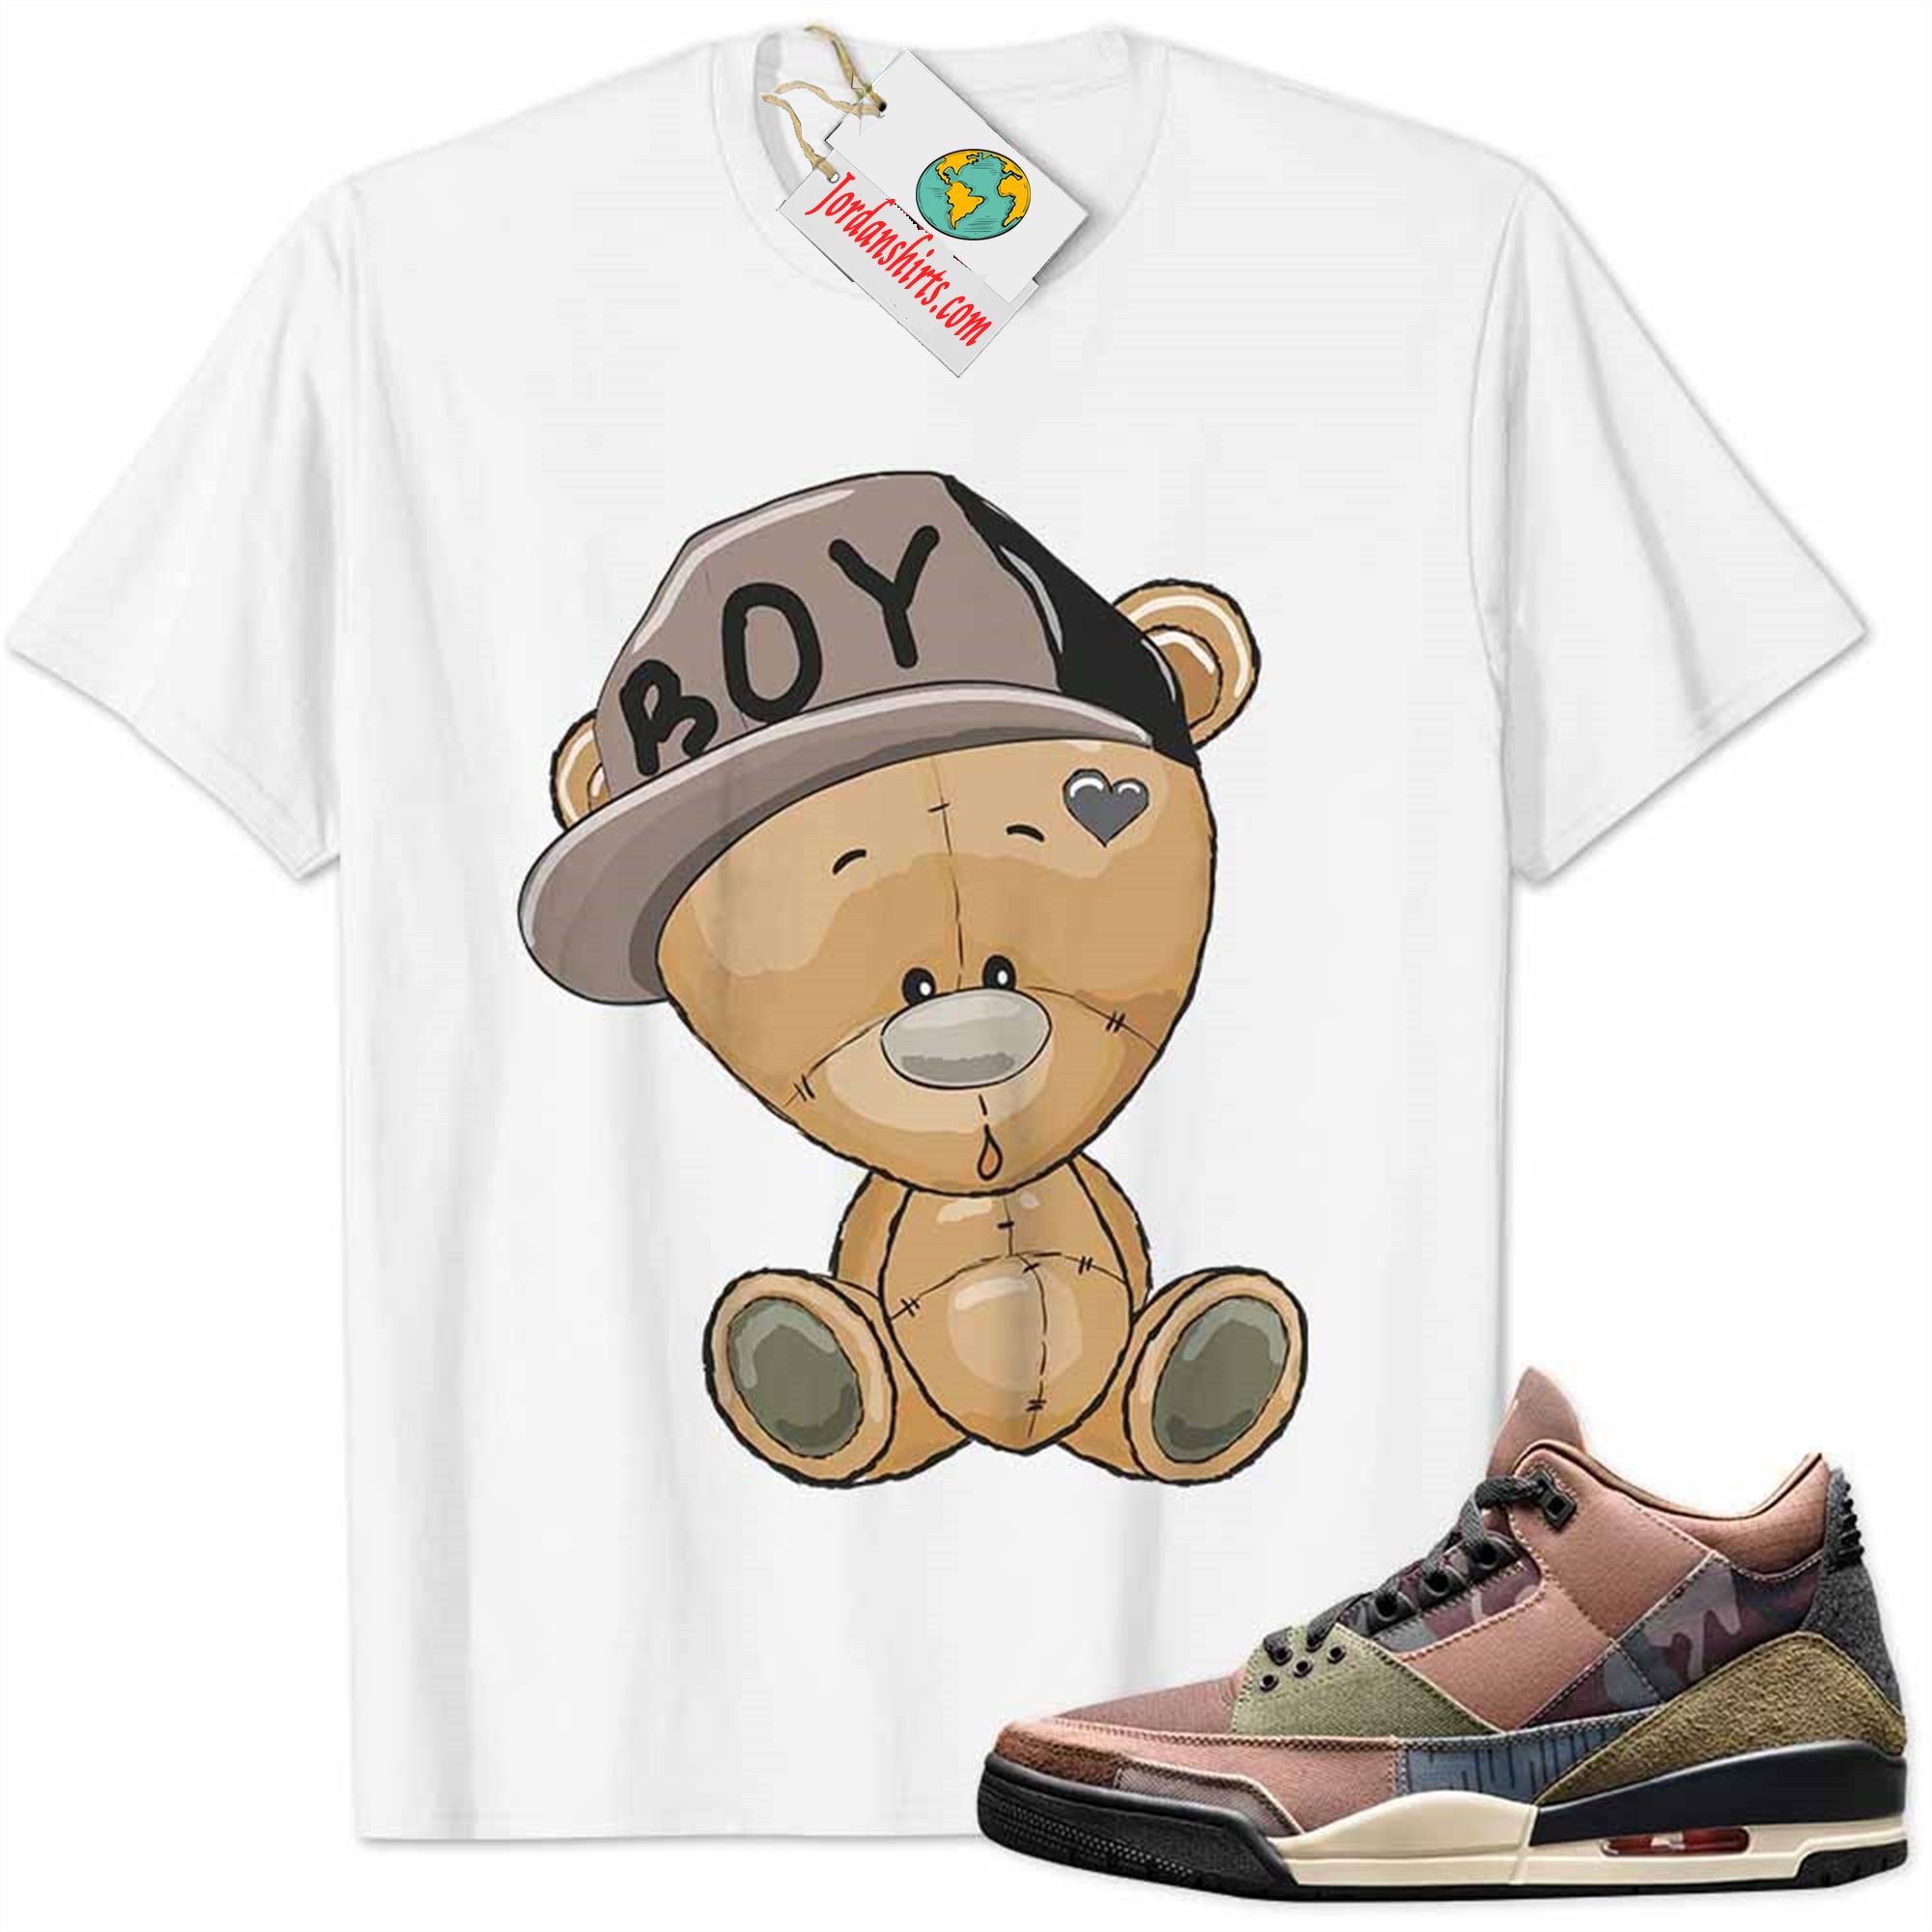 Jordan 3 Shirt, Jordan 3 Patchwork Shirt Cute Baby Teddy Bear White Size Up To 5xl